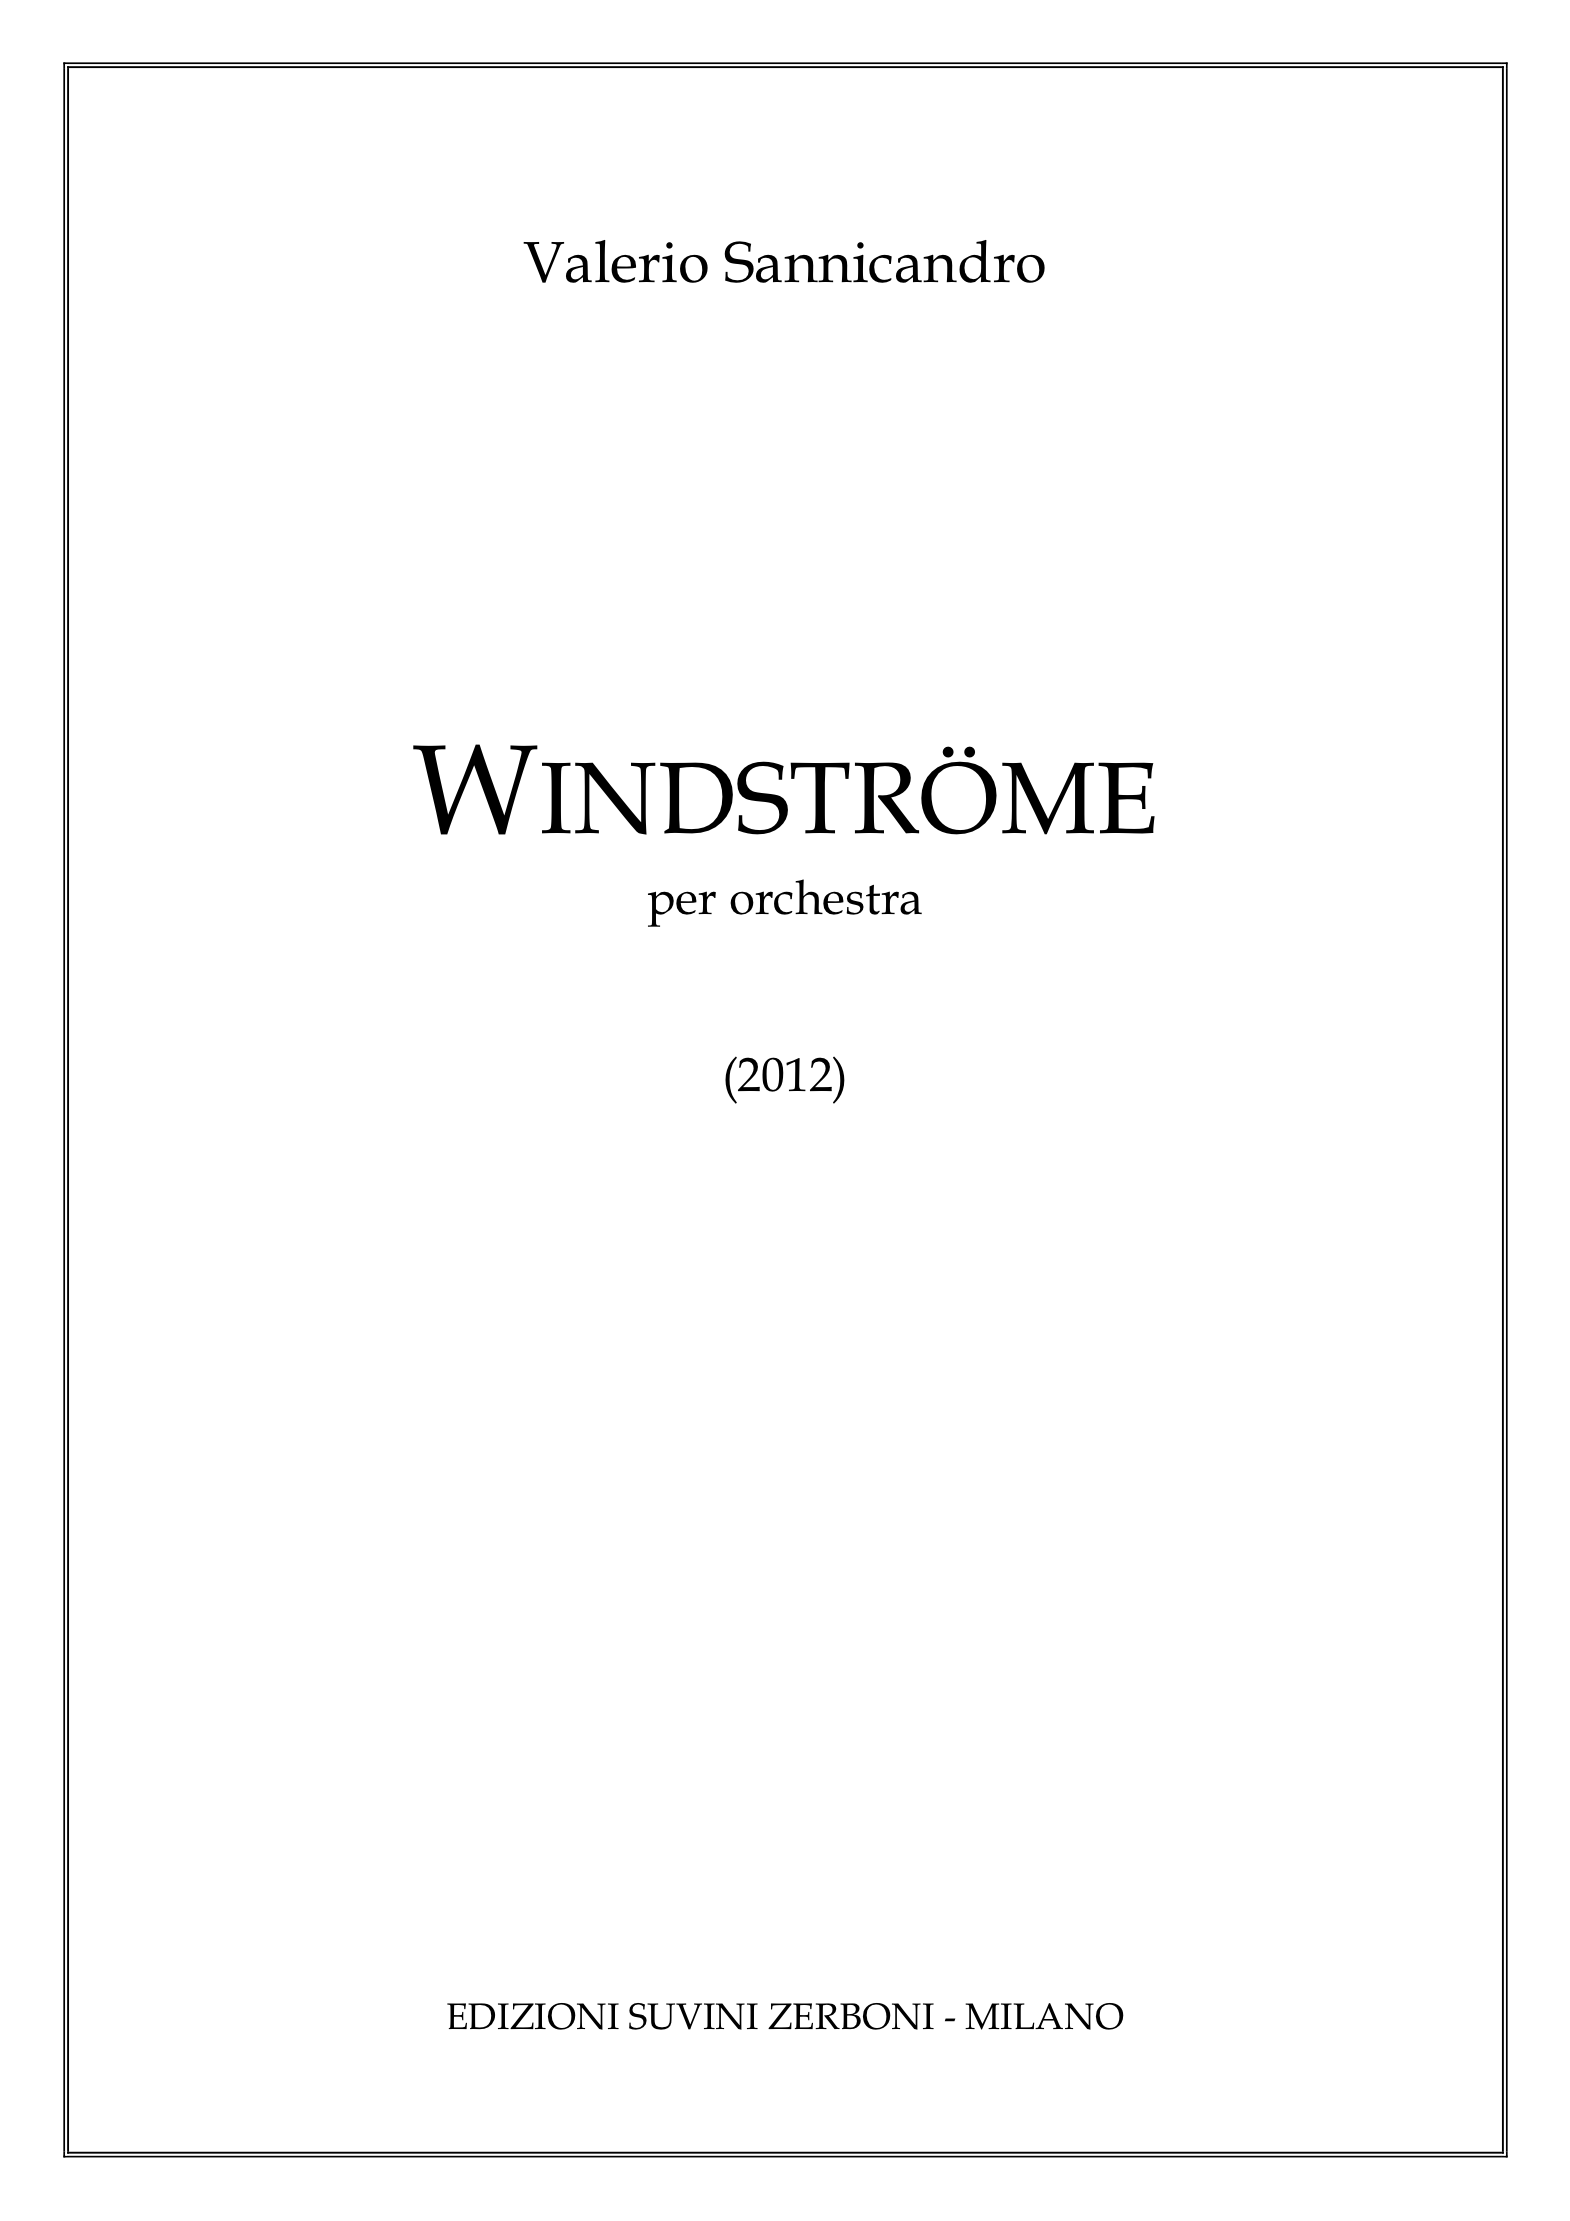 Windstroeme_Sannicandro 1